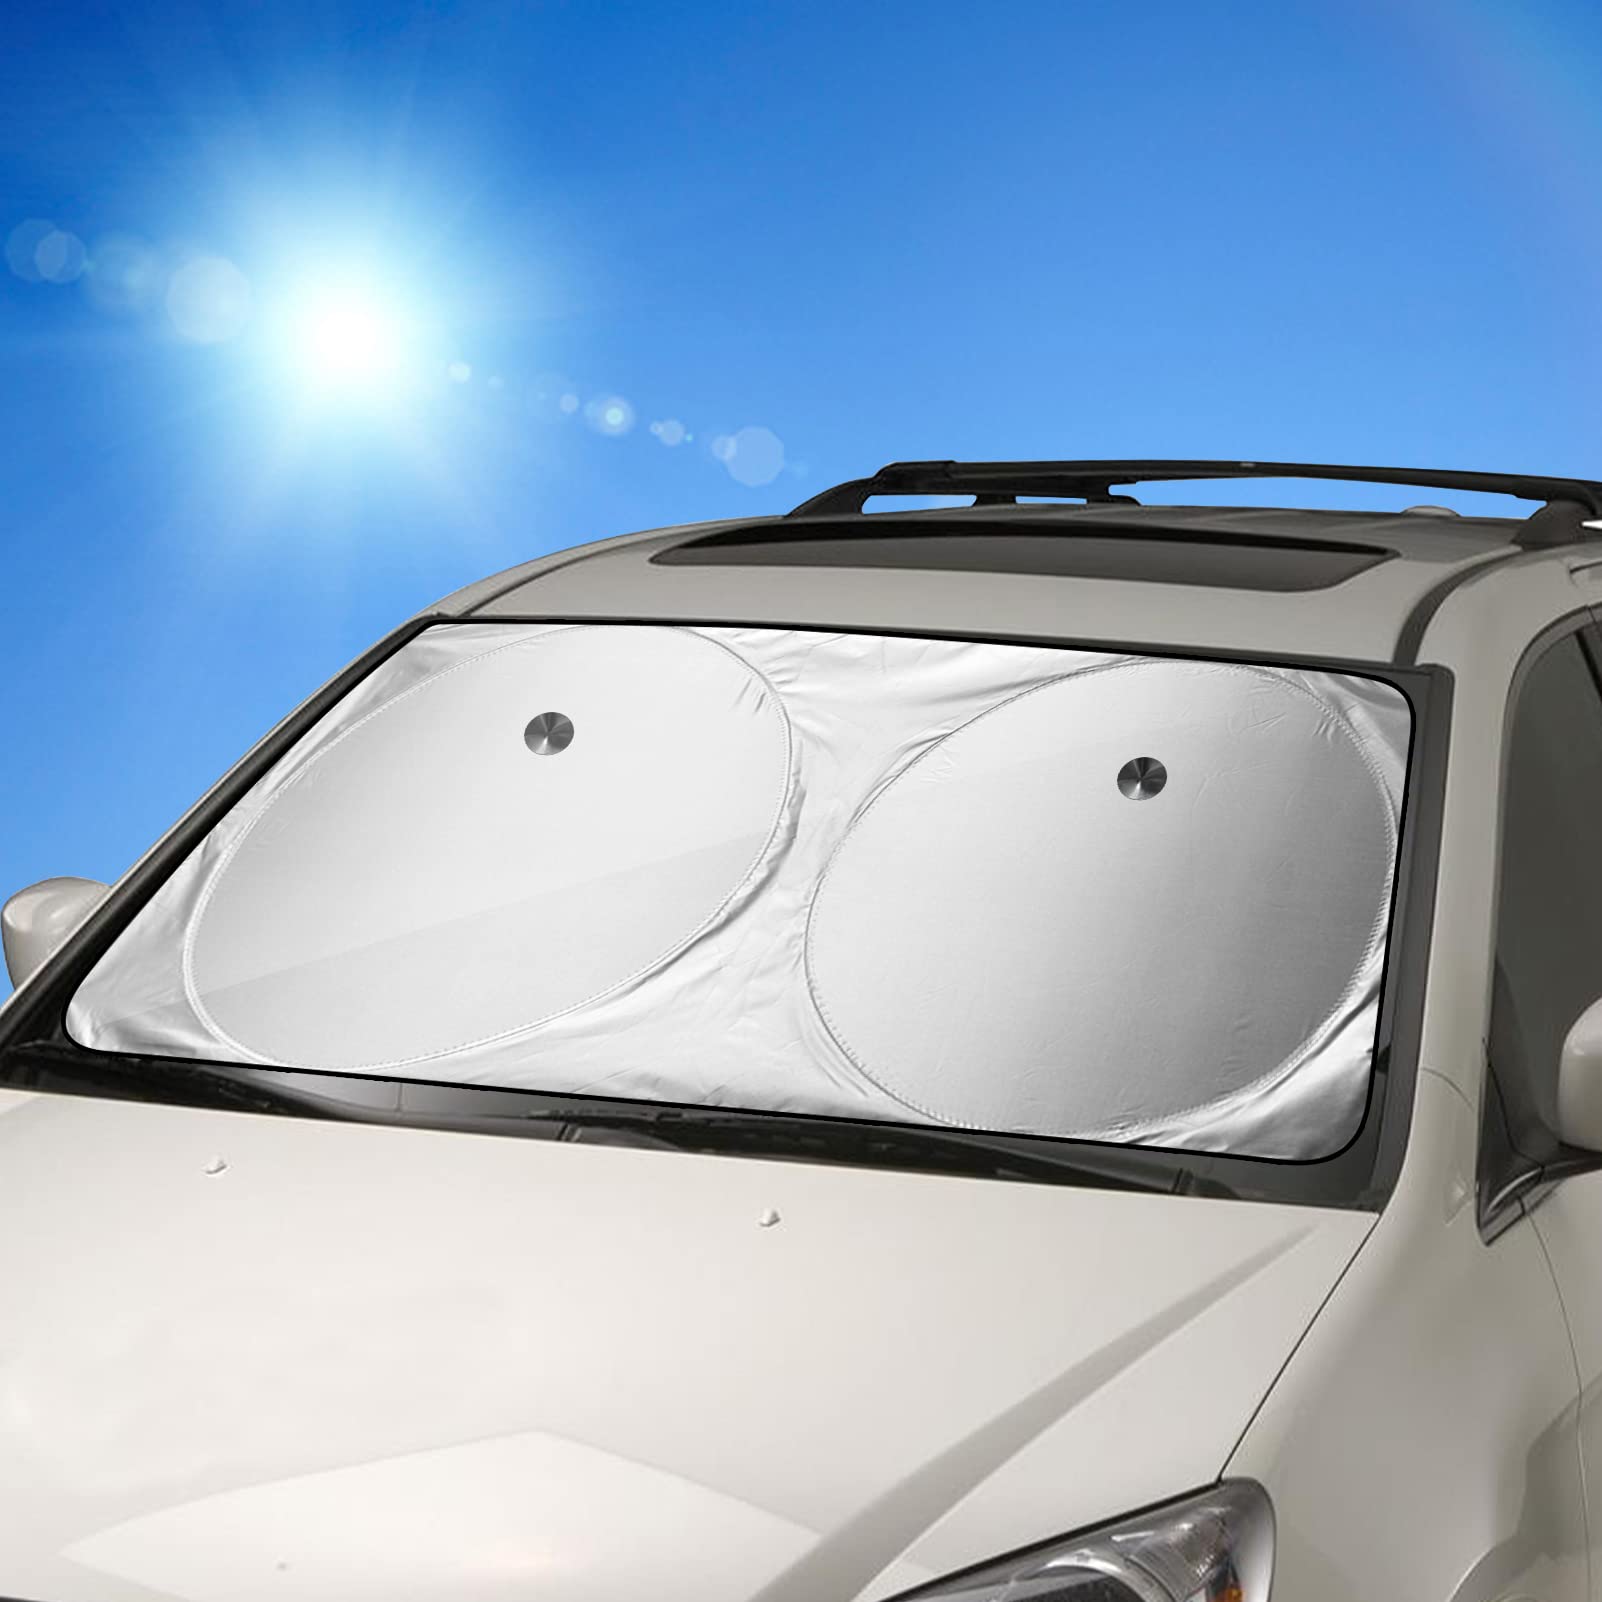 Sonnenschutz Auto frontscheibe, FRECOO hitzeschutz Auto frontscheibe mit Saugnäpfen für Frontscheibe Auto Sonnenblende,Faltbarer Schutzschirm Sonnenblende für Kinder, Hunde Mit UV Schutz,160 * 80 cm von FRECOO